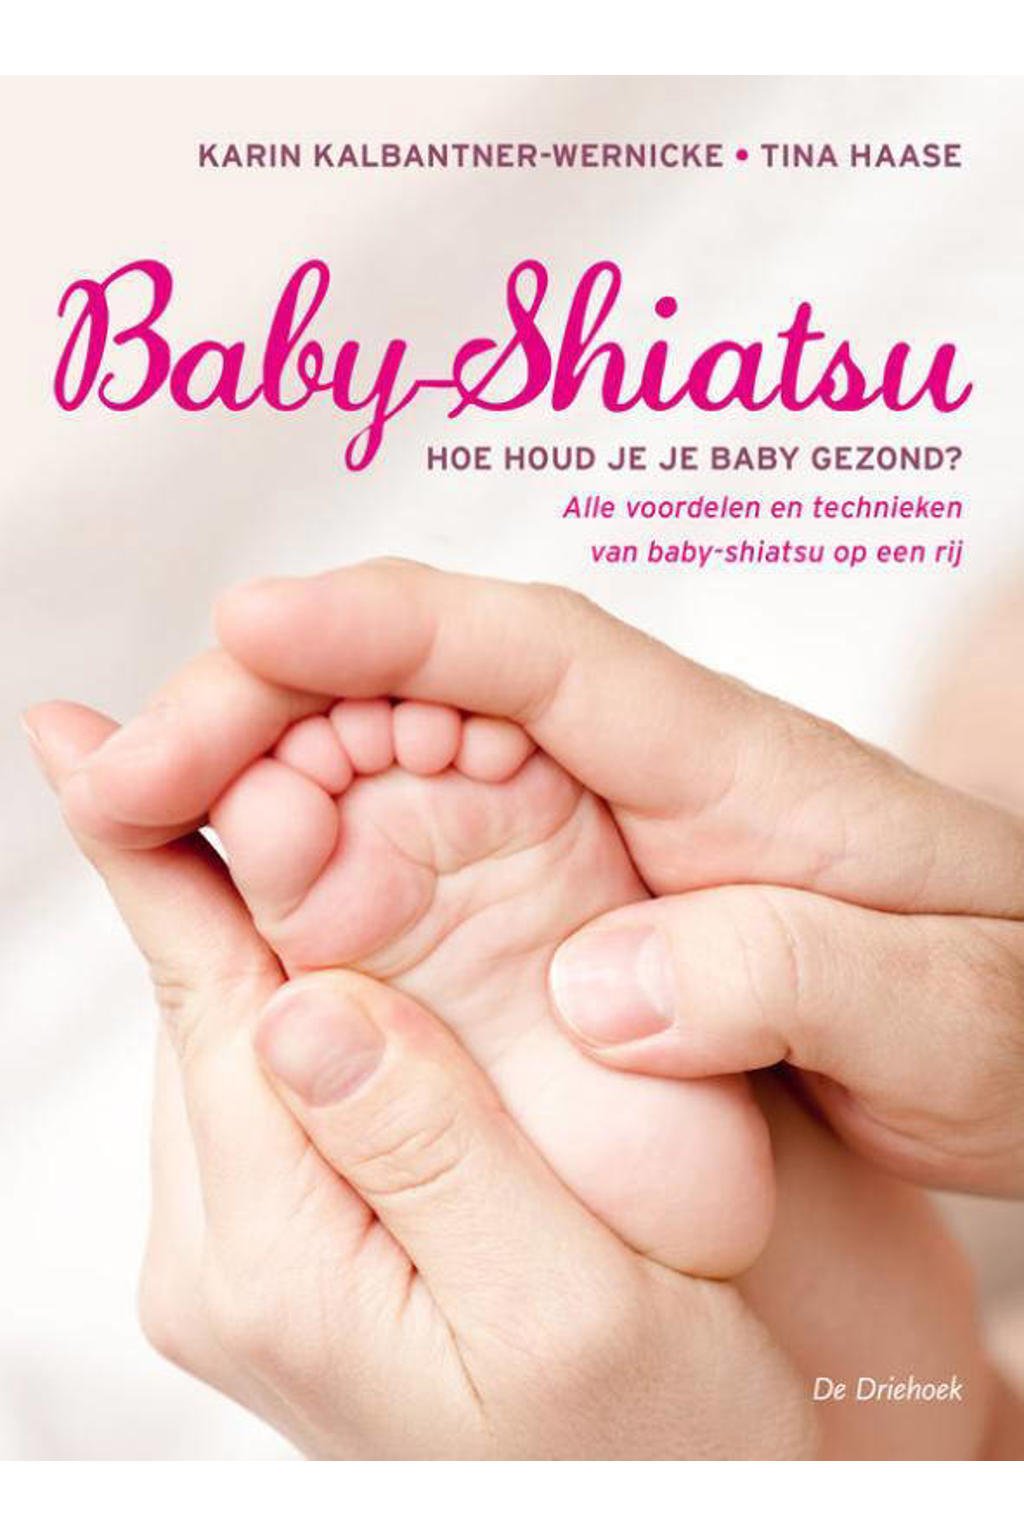 Baby-shiatsu - Karin Kalbantner-Wernicke en Tina Haase